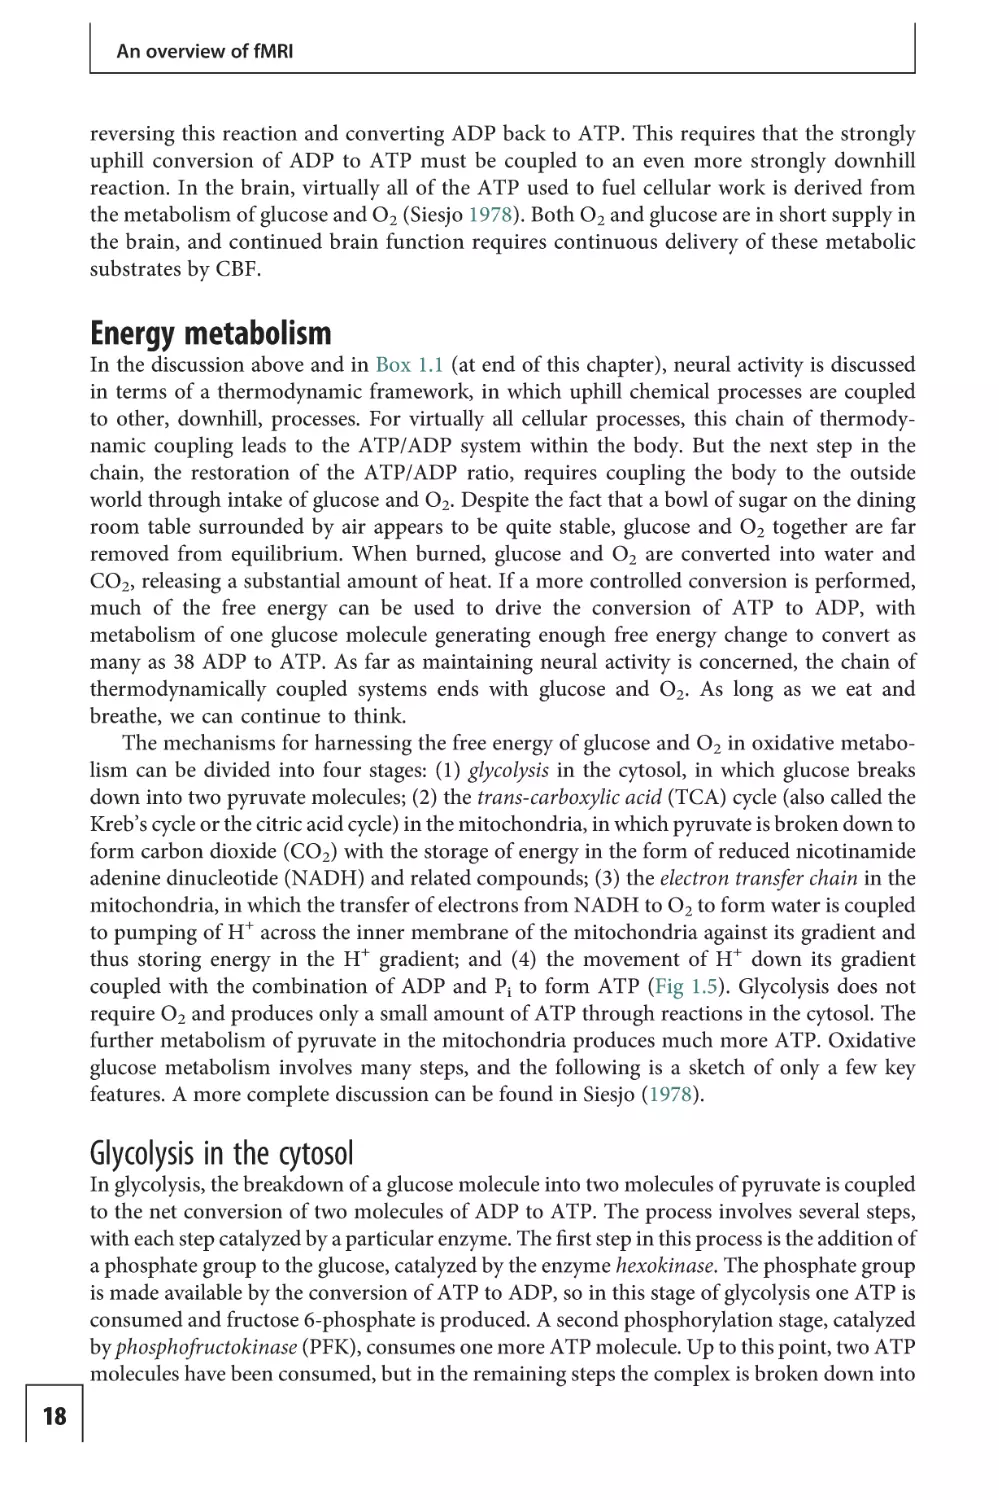 Energy metabolism
Glycolysis in the cytosol